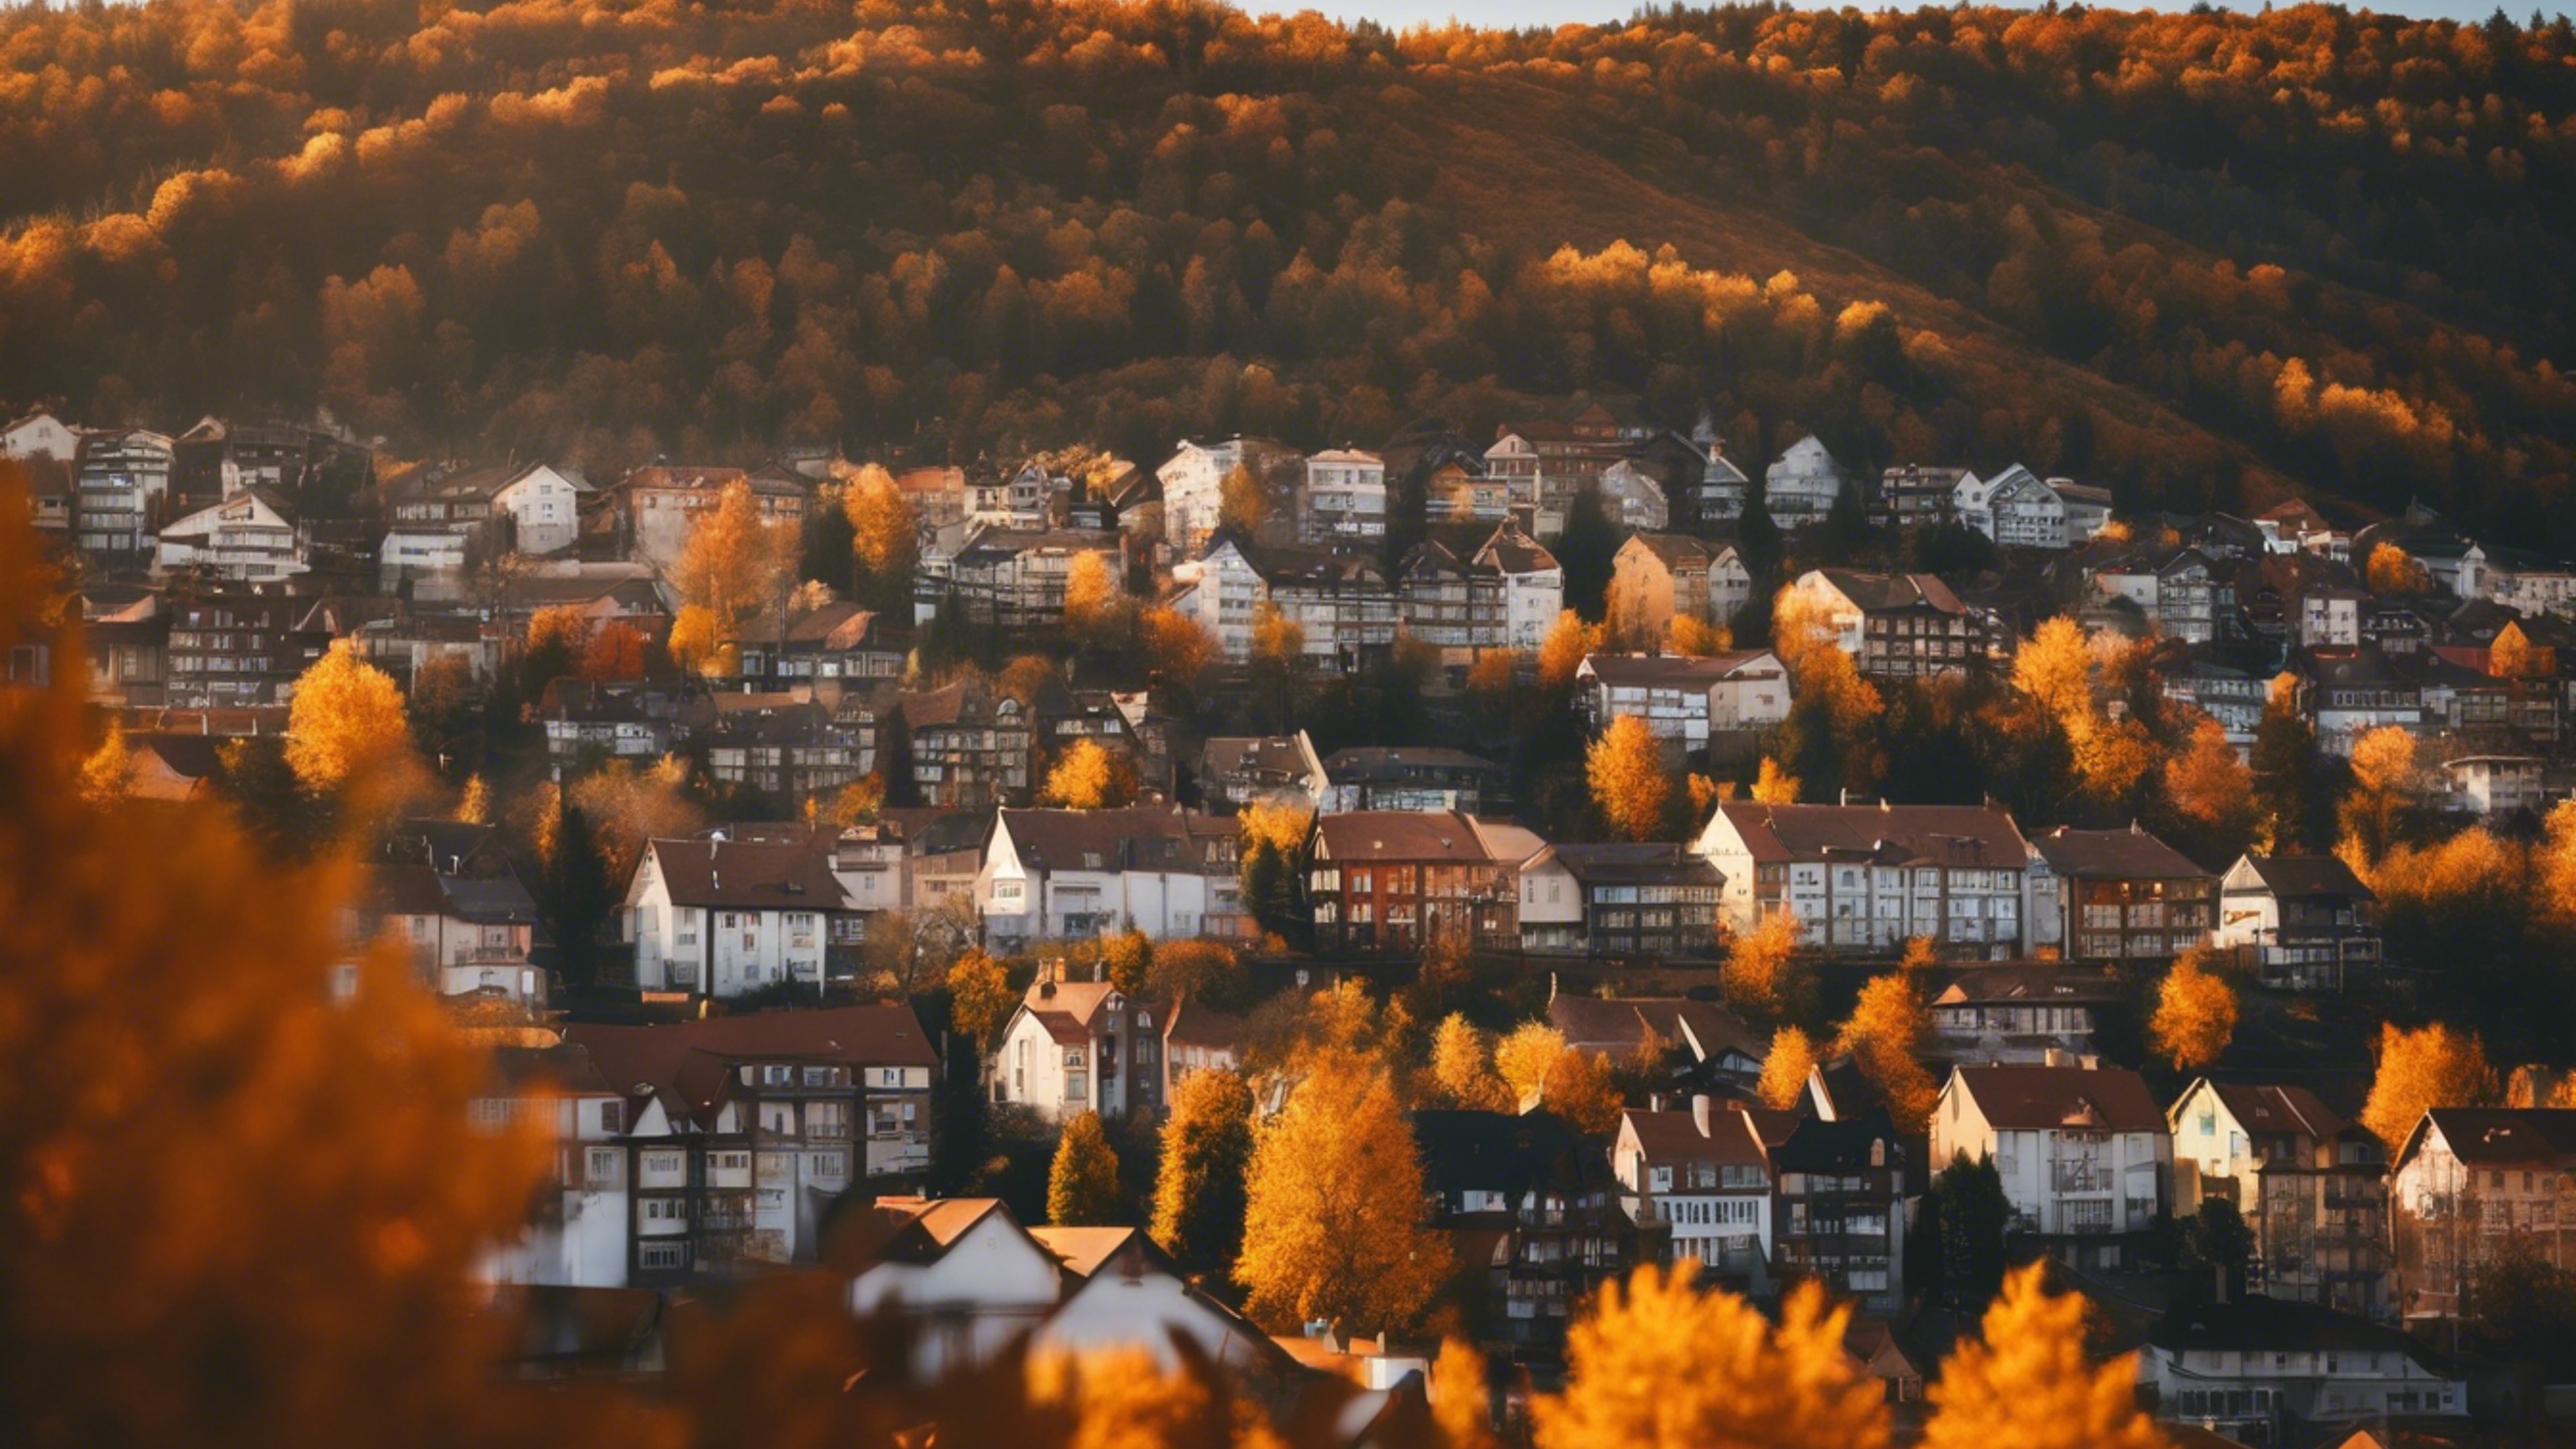 A calm skyline view of a mountain town in autumn, dappled in hues of orange and gold. کاغذ دیواری[cb2d4b5eada64efeb989]